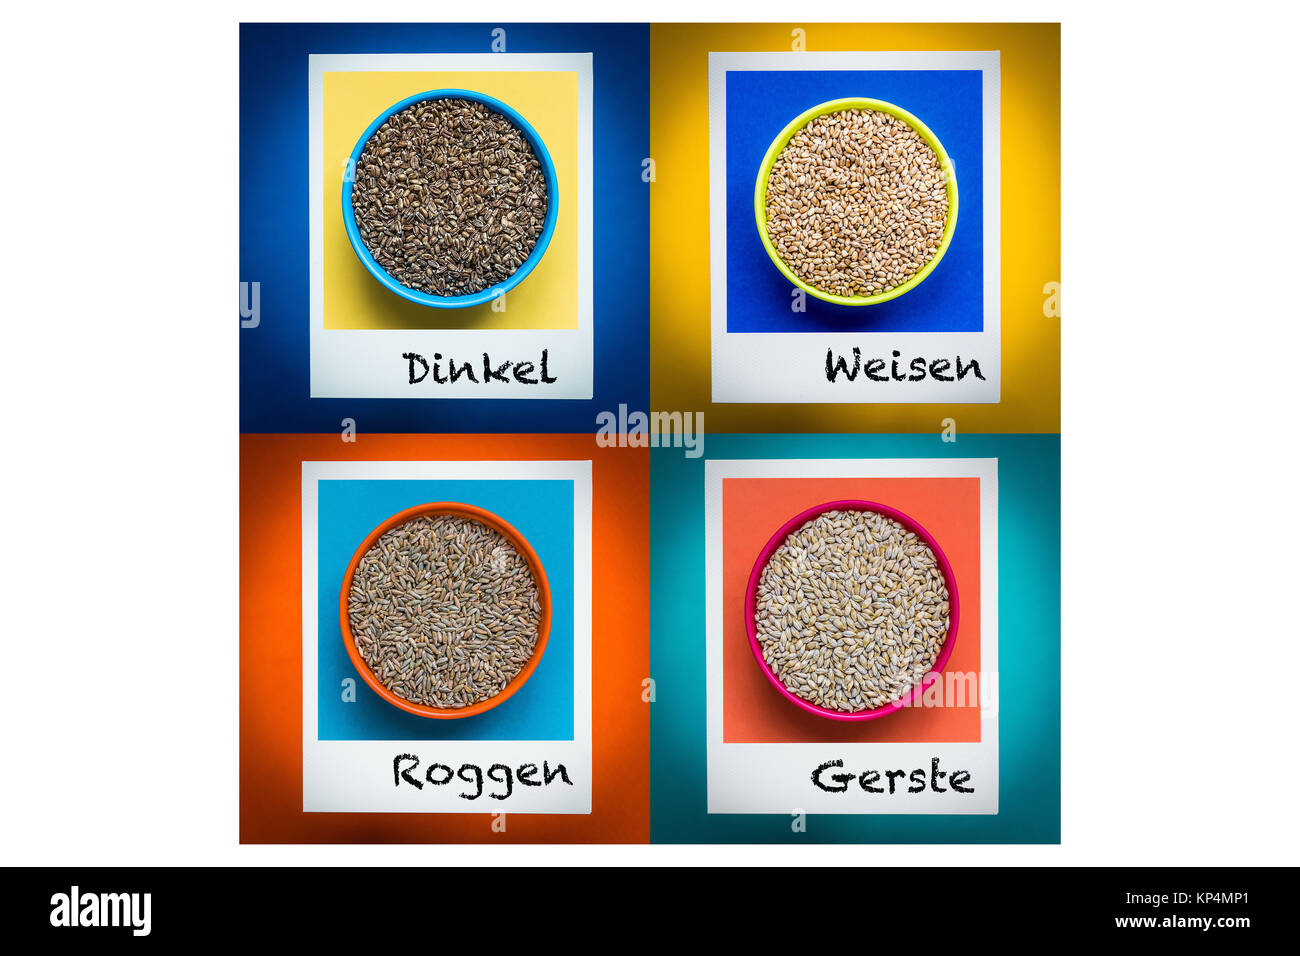 Foods containing gluten( selt, wheat, rye, barley ). Stock Photo